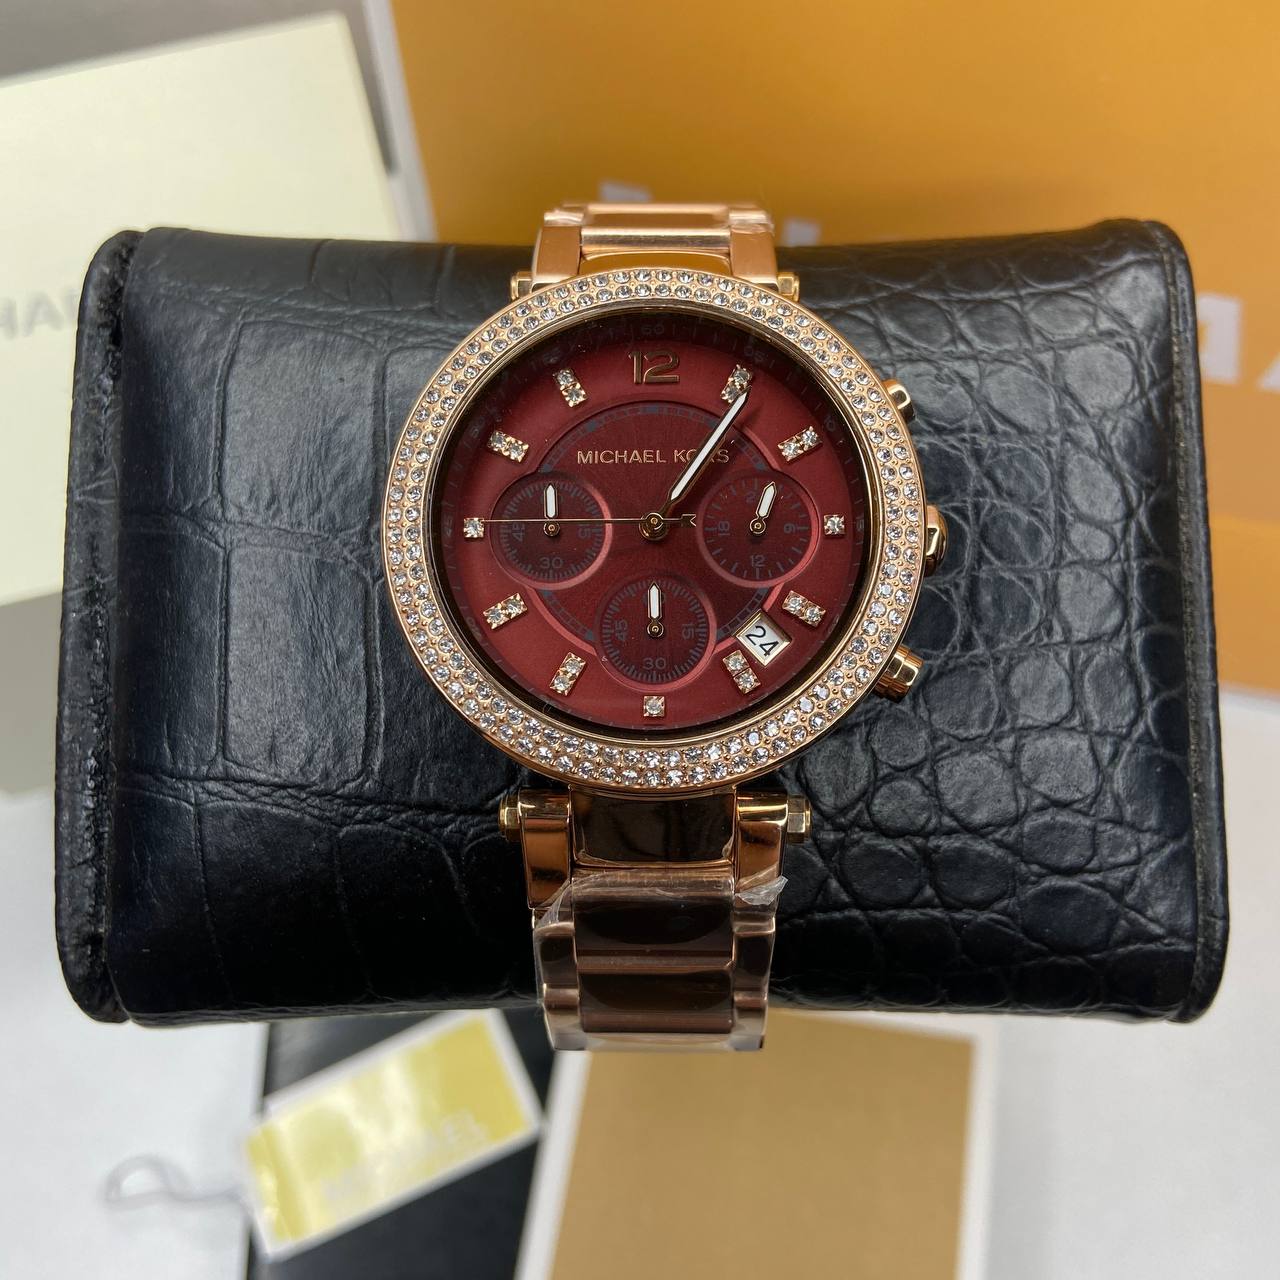 MICHAEL KORS Women's Parker Chronograph Crystal Bezel Red Dial Watch MK6106